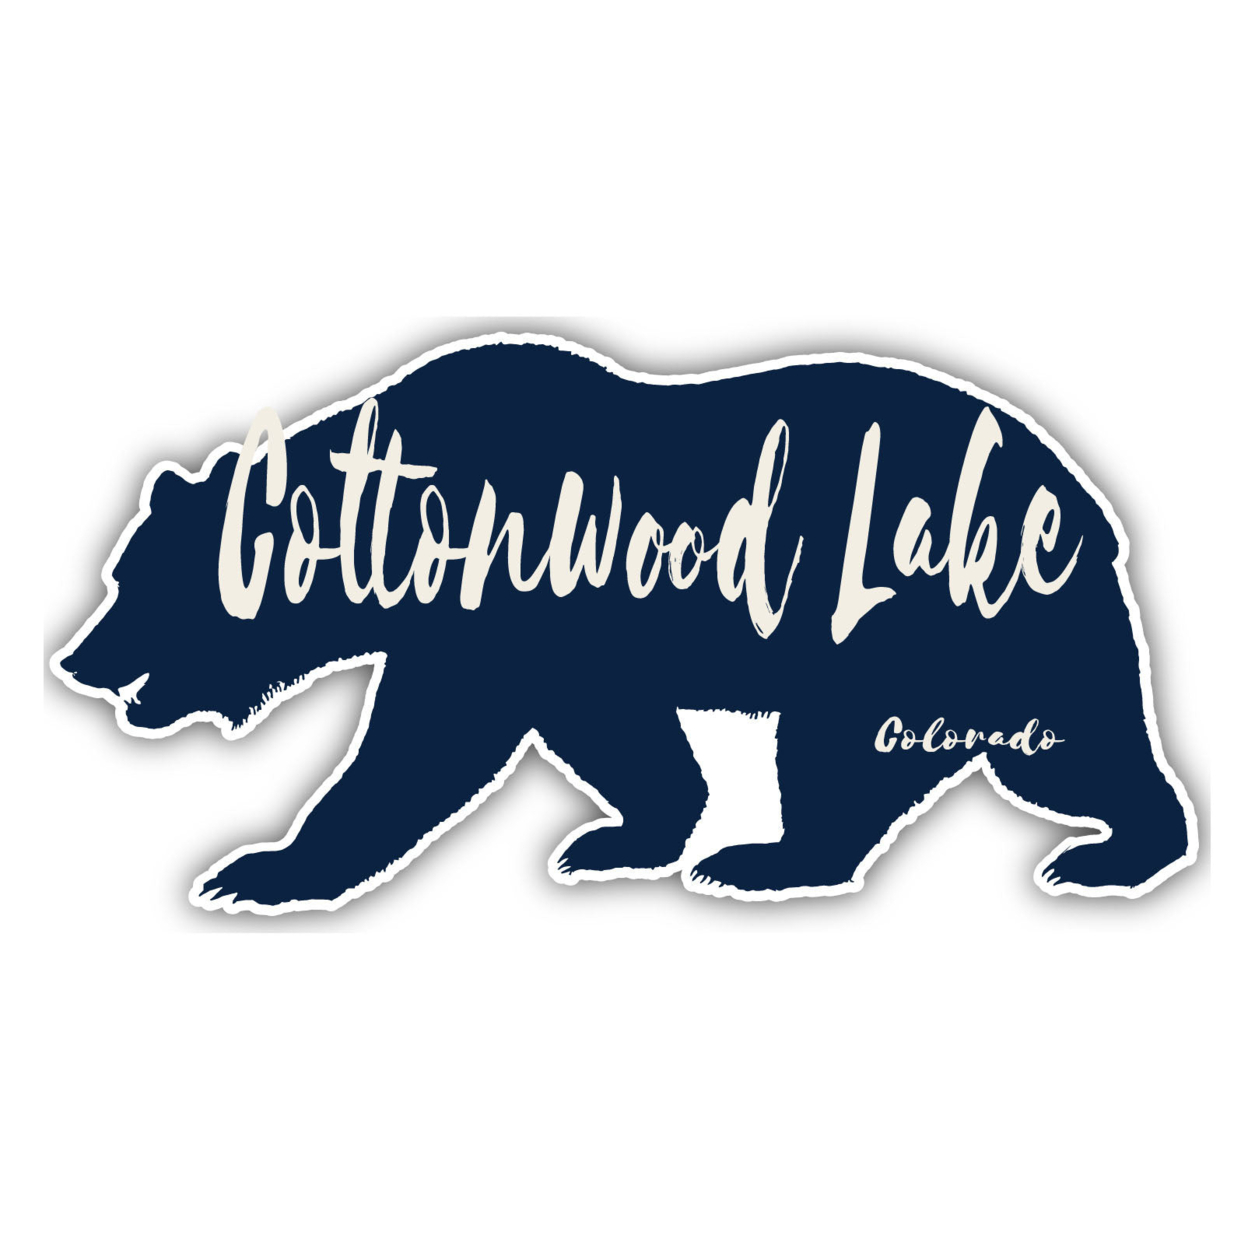 Cottonwood Lake Colorado Souvenir Decorative Stickers (Choose Theme And Size) - Single Unit, 4-Inch, Bear